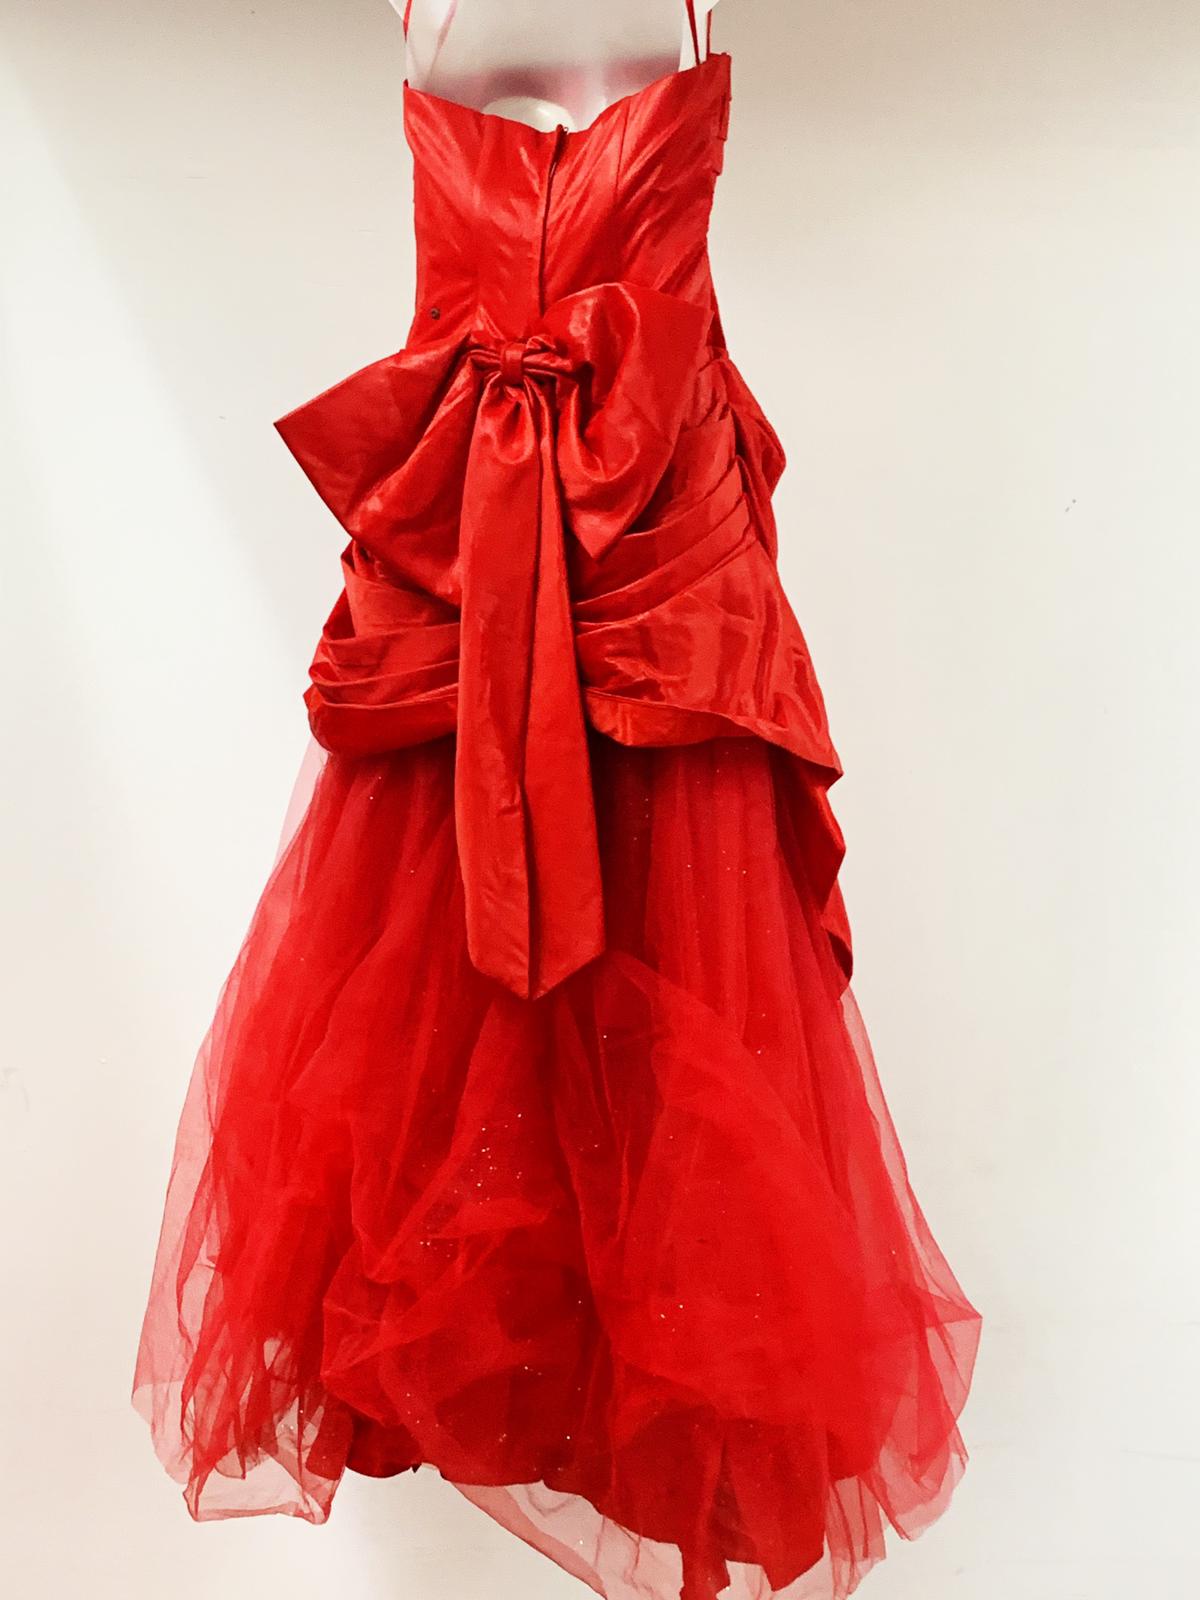 Red elegant dress